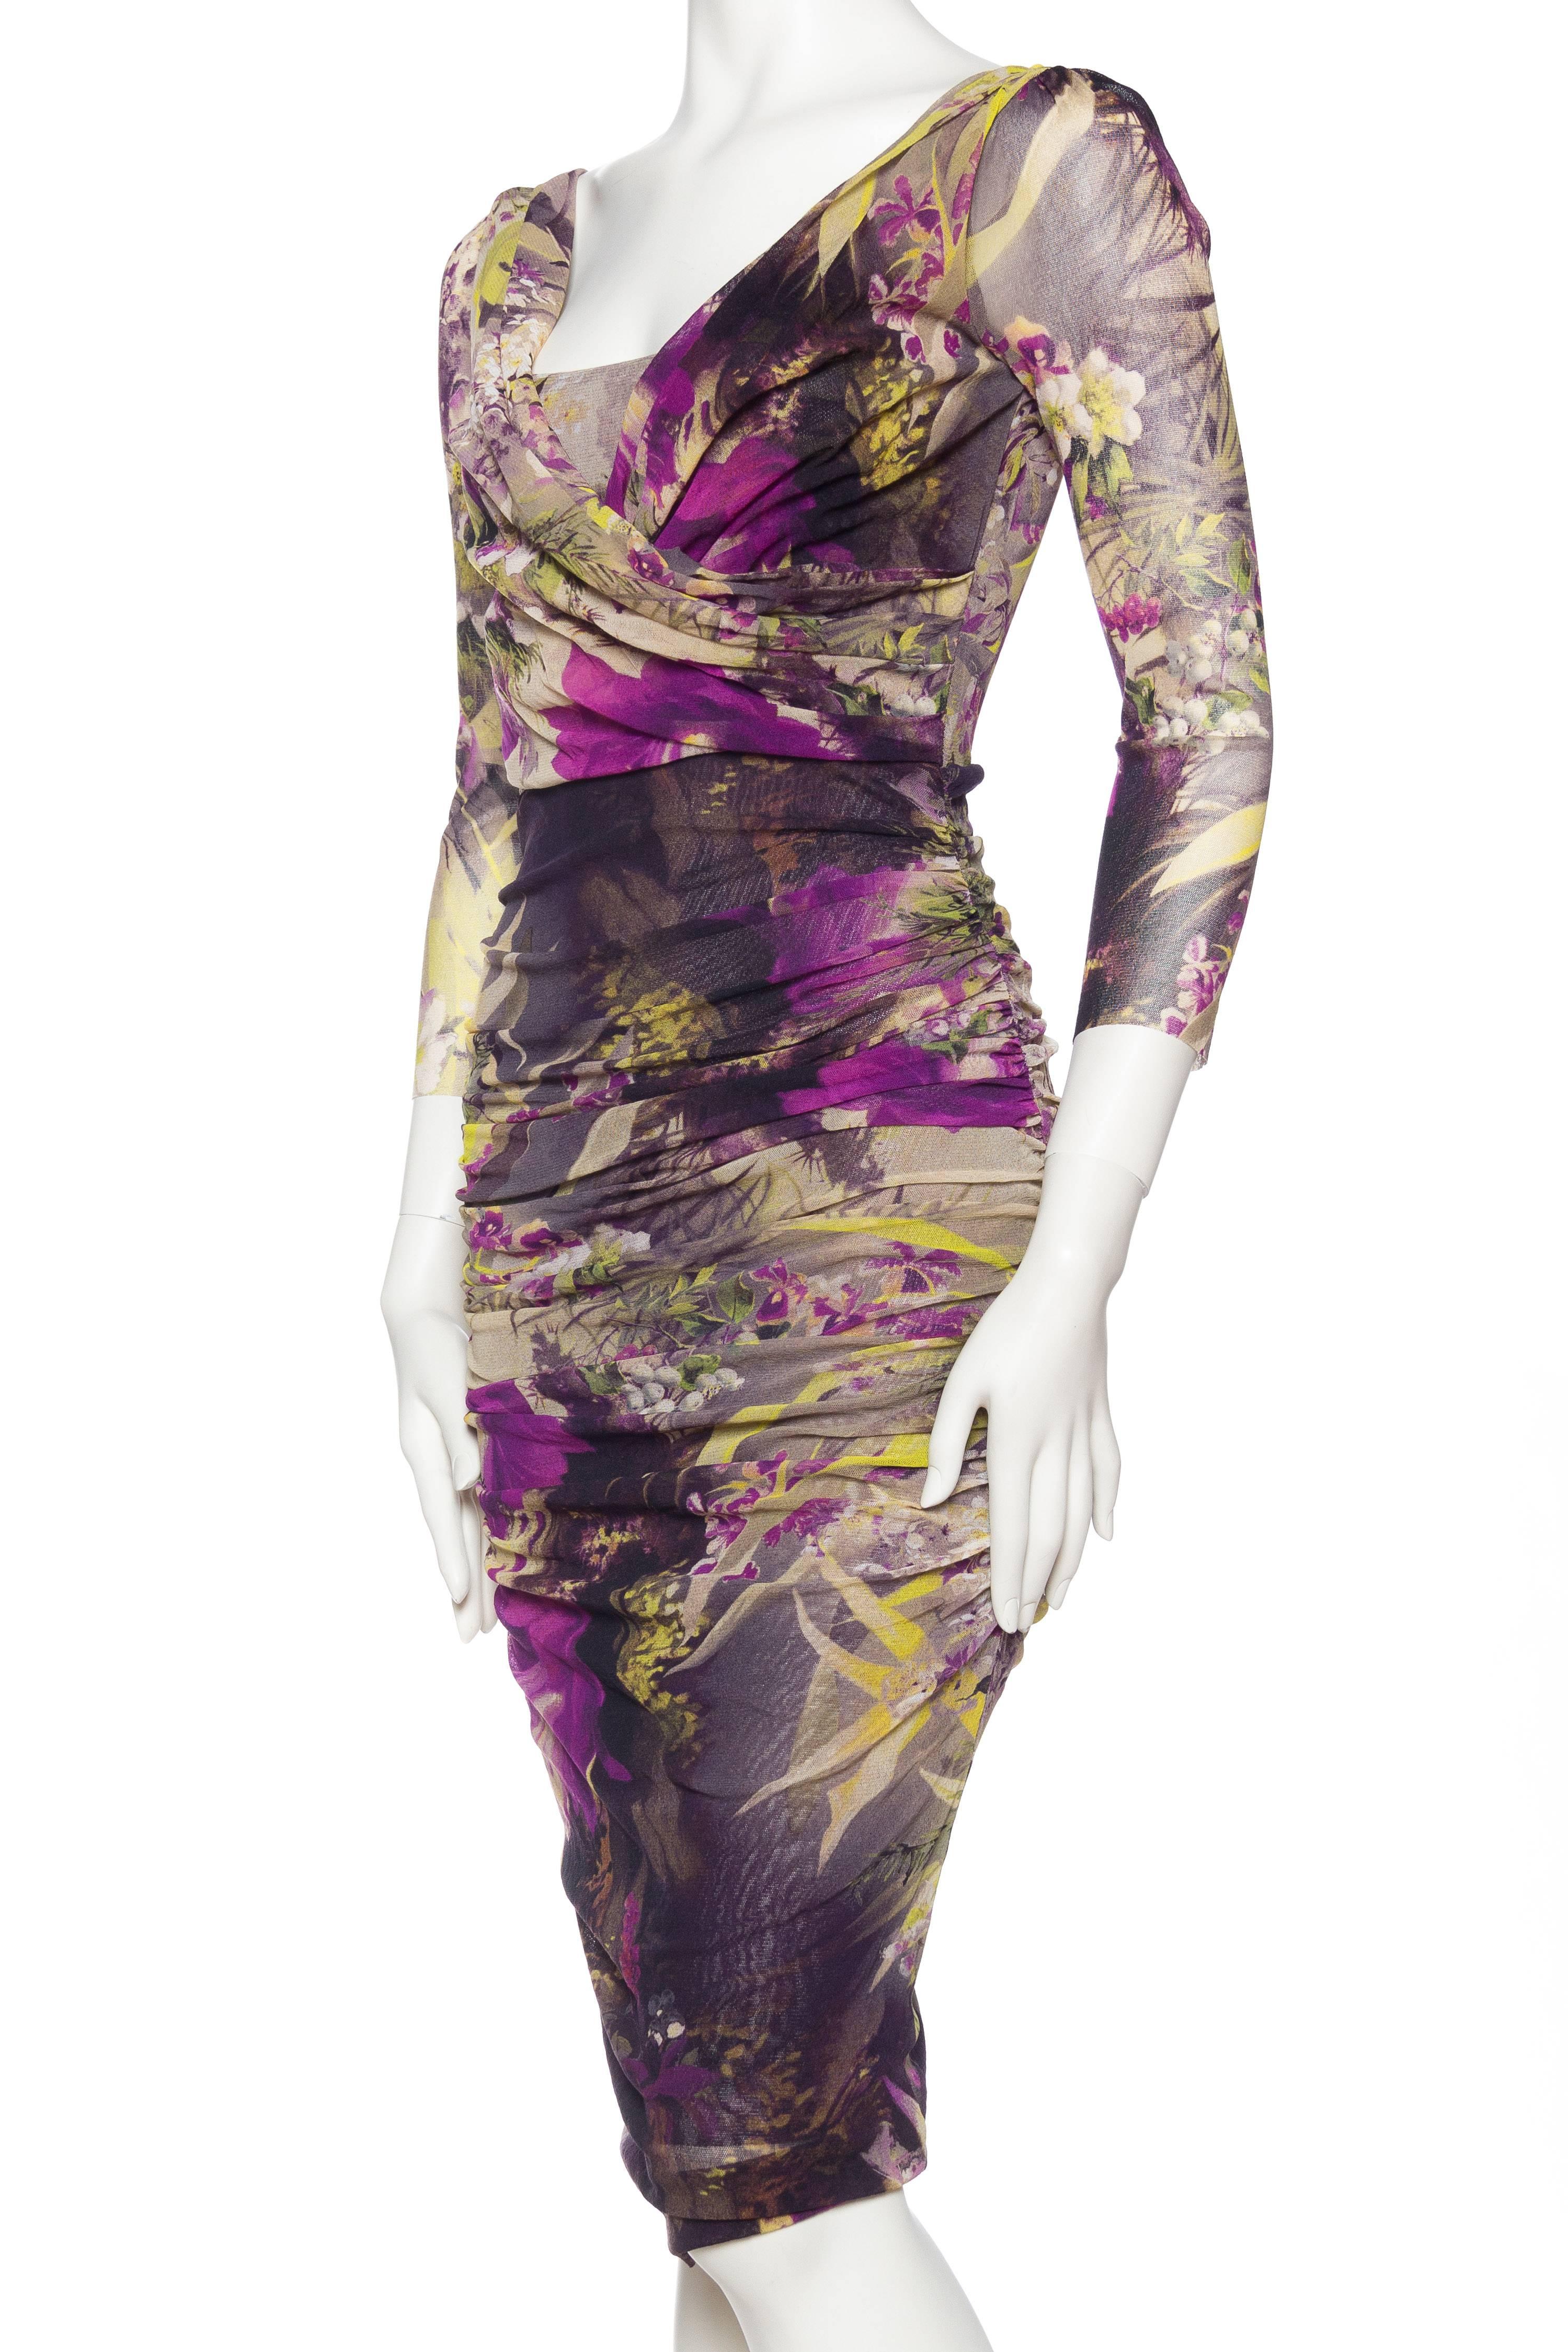 Women's Jean Paul Gaultier Abstract Floral Body-con Dress